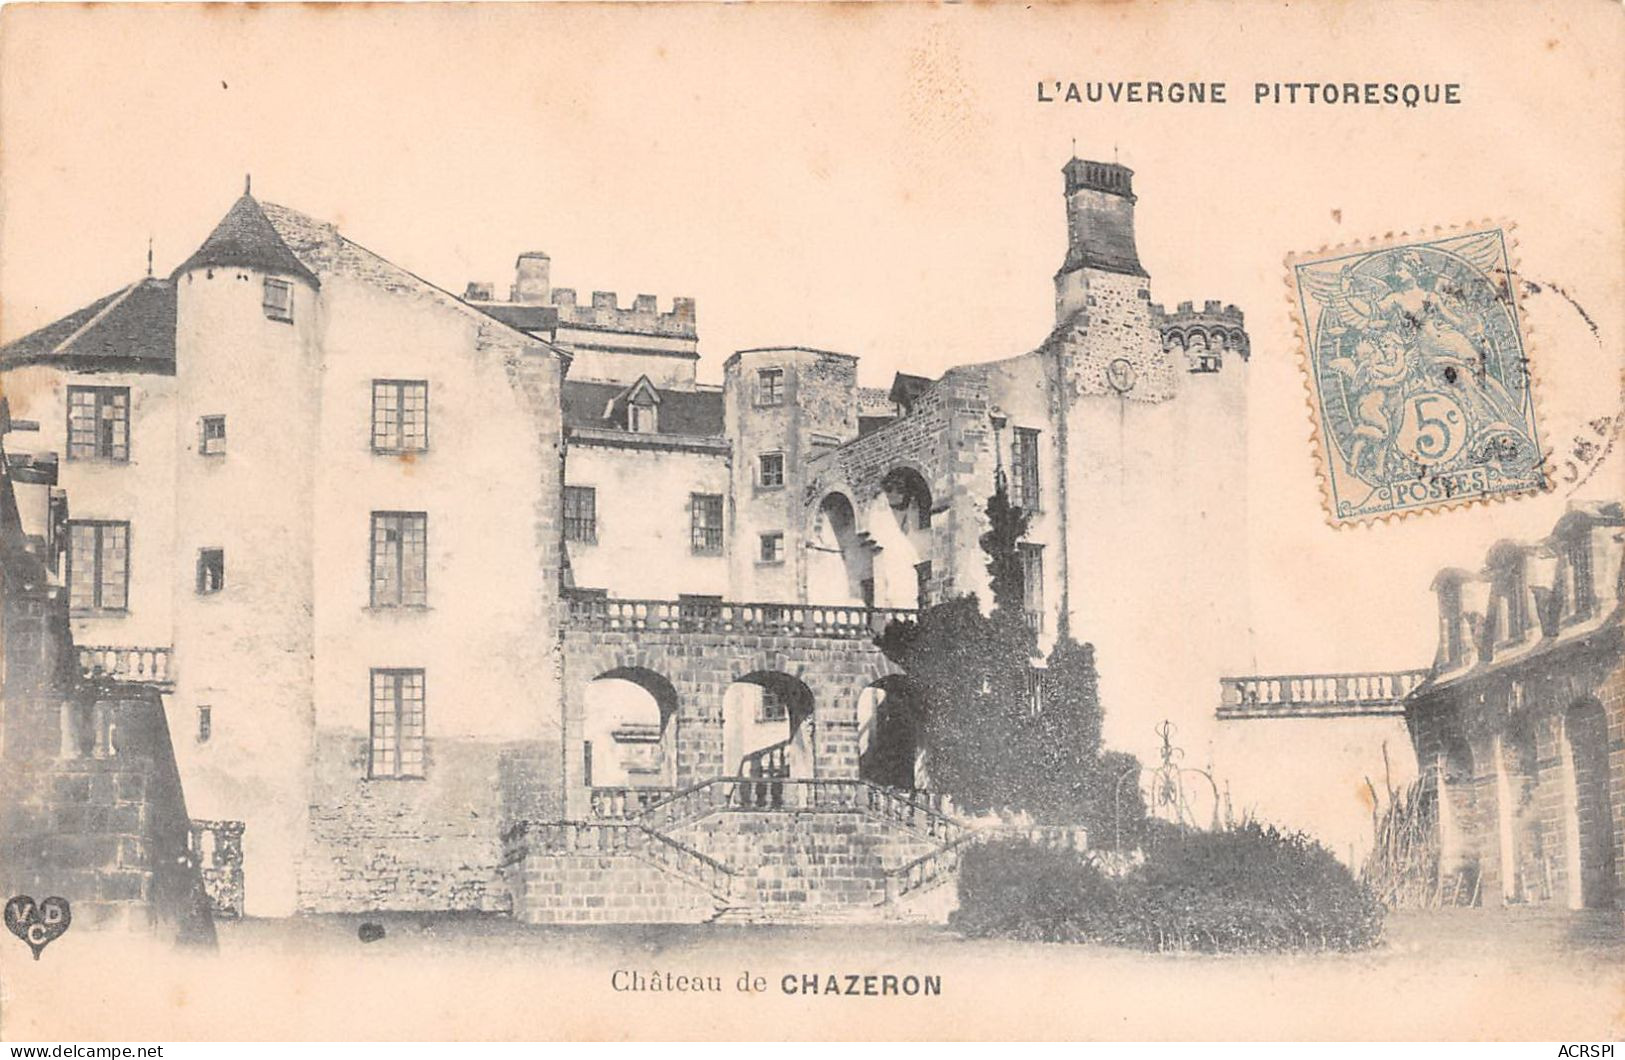 chatel guyon chateau de chazeron 17 cartes differentes vues du chateau rare (scan recto-verso) OO 0964